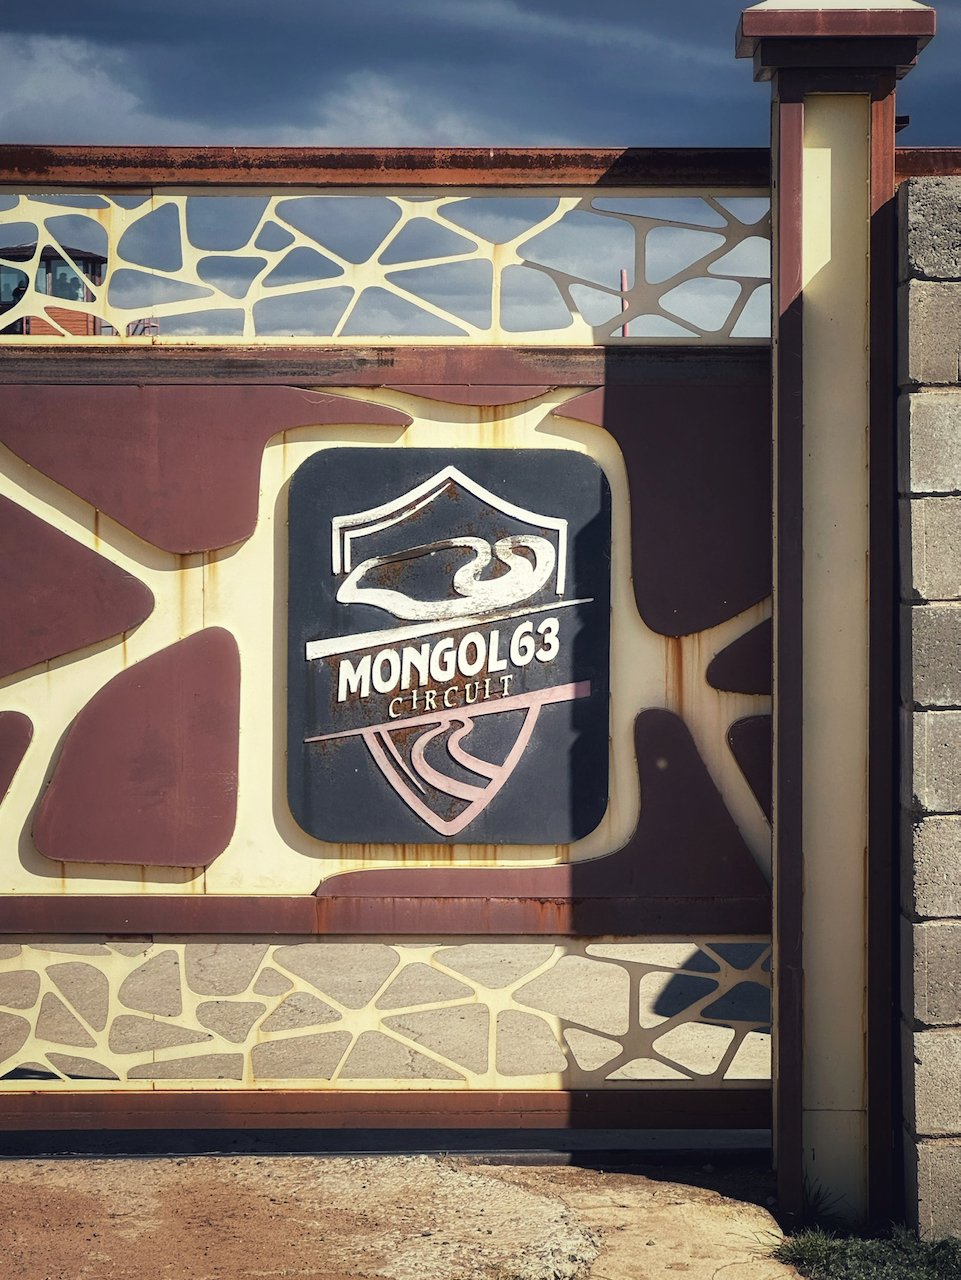 Mongol63 Mongolia only circuit.jpeg